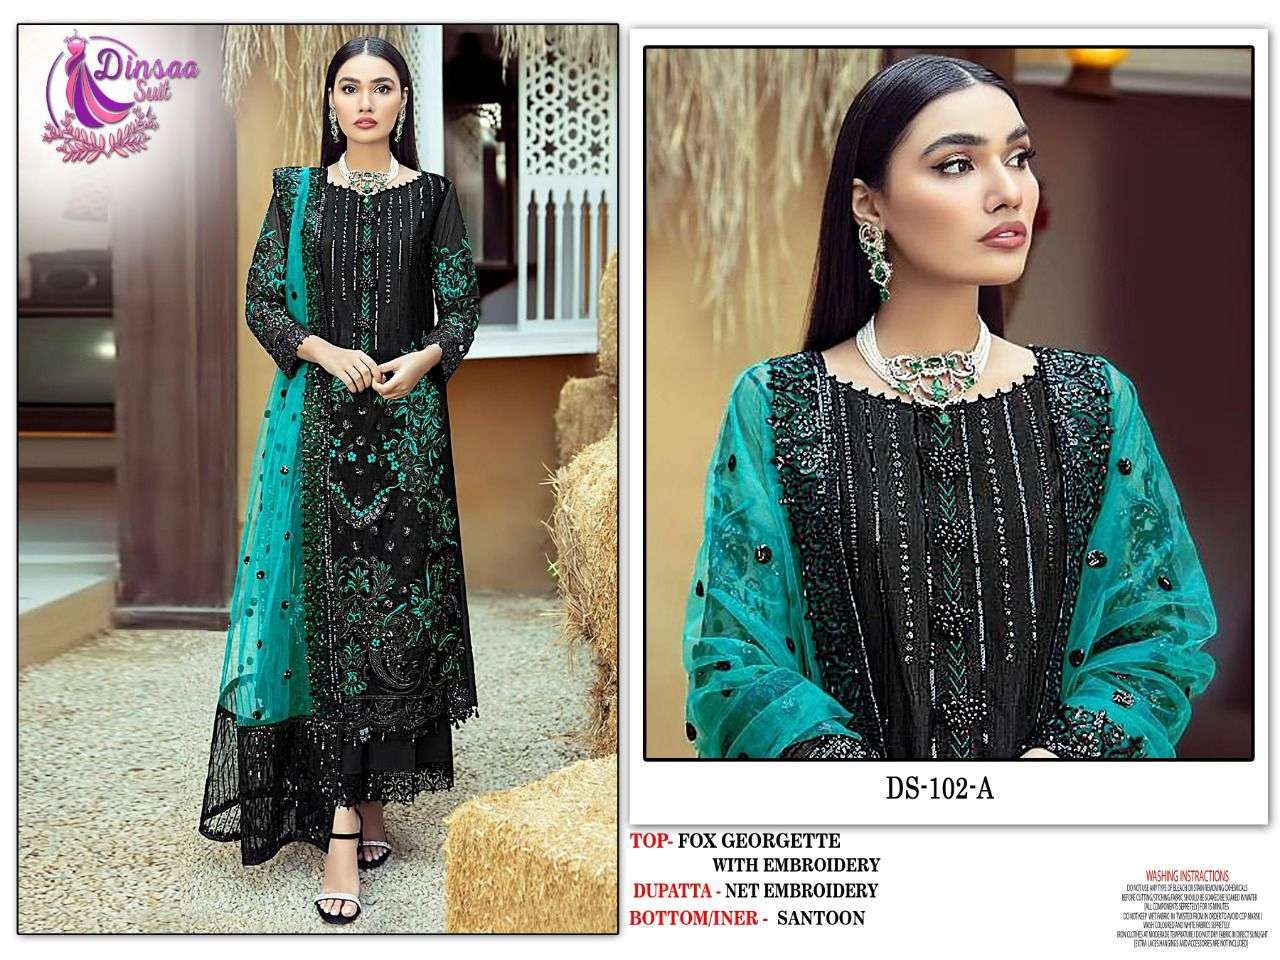 dinsaa 102 design colors pakistani dresses at wholesale